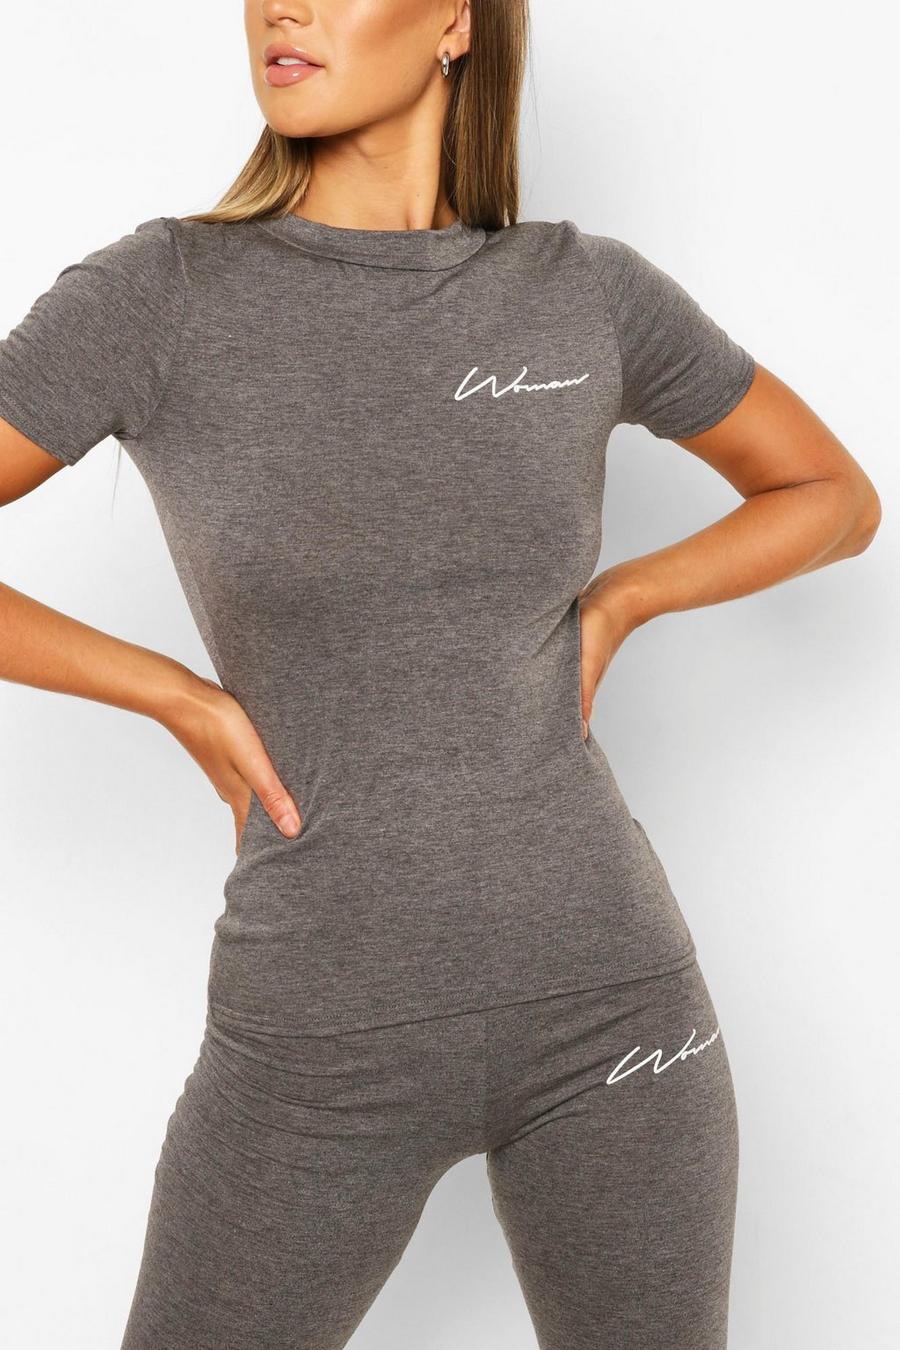 Charcoal Fit Woman Script Gym T Shirt image number 1